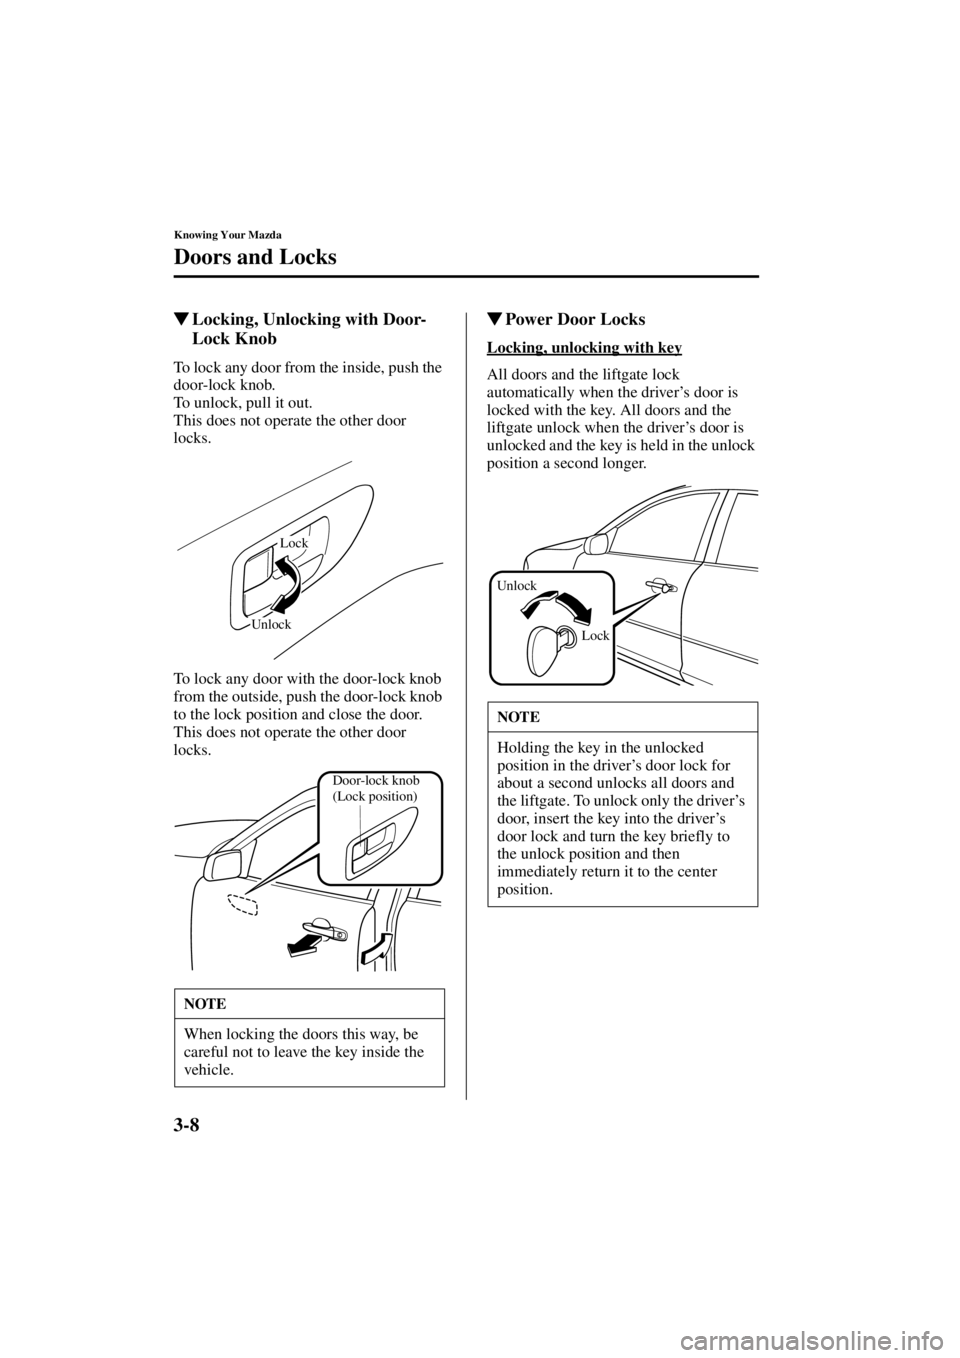 MAZDA MODEL 3 5-DOOR 2004  Owners Manual 3-8
Knowing Your Mazda
Doors and Locks
Form No. 8S18-EA-03I
Locking, Unlocking with Door-
Lock Knob
To lock any door from the inside, push the 
door-lock knob.
To unlock, pull it out.
This does not o